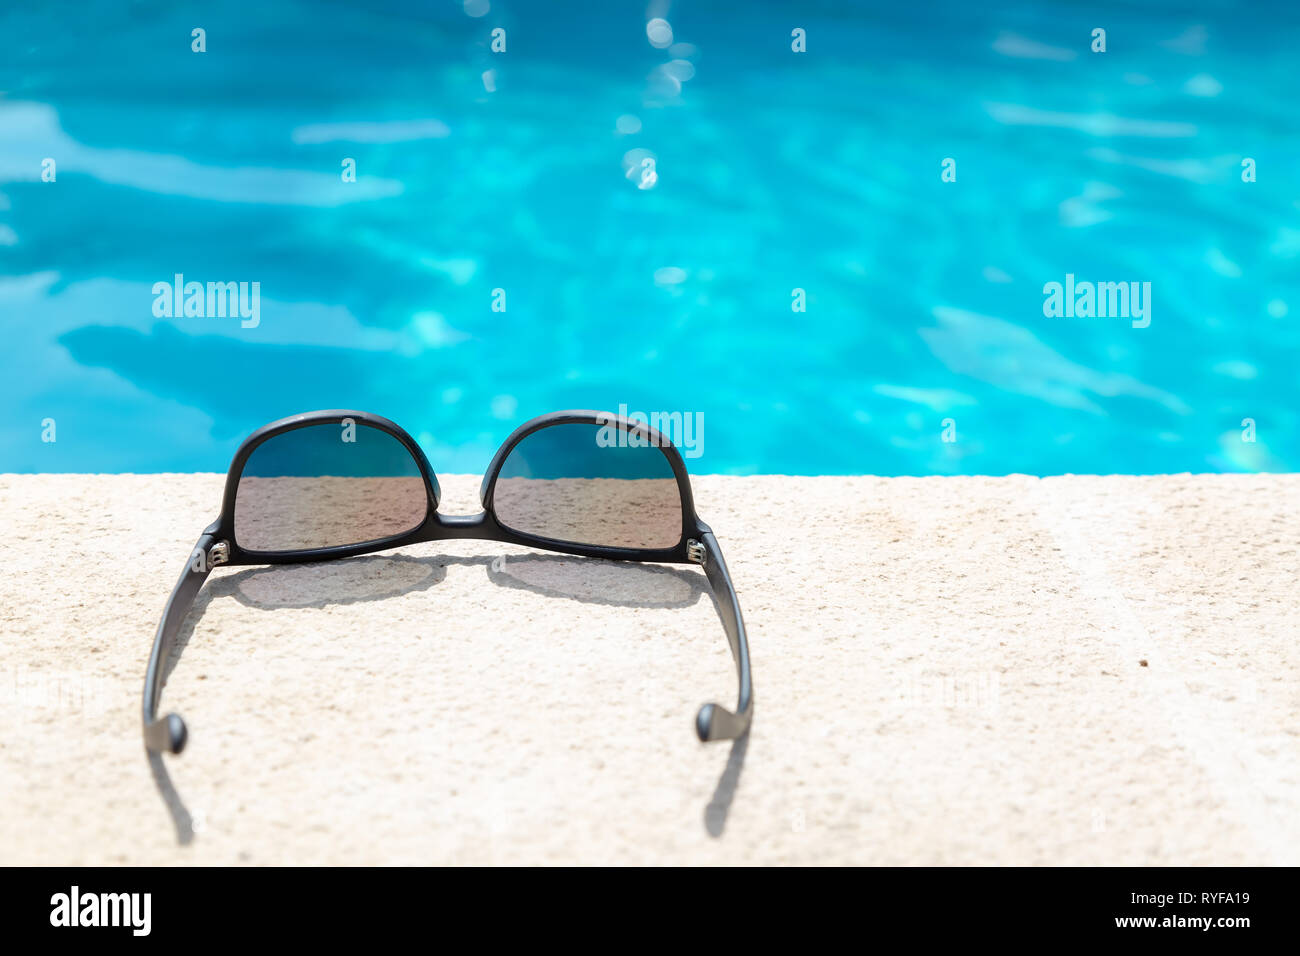 Sunglasses near the edge of a swimming pool Stock Photo